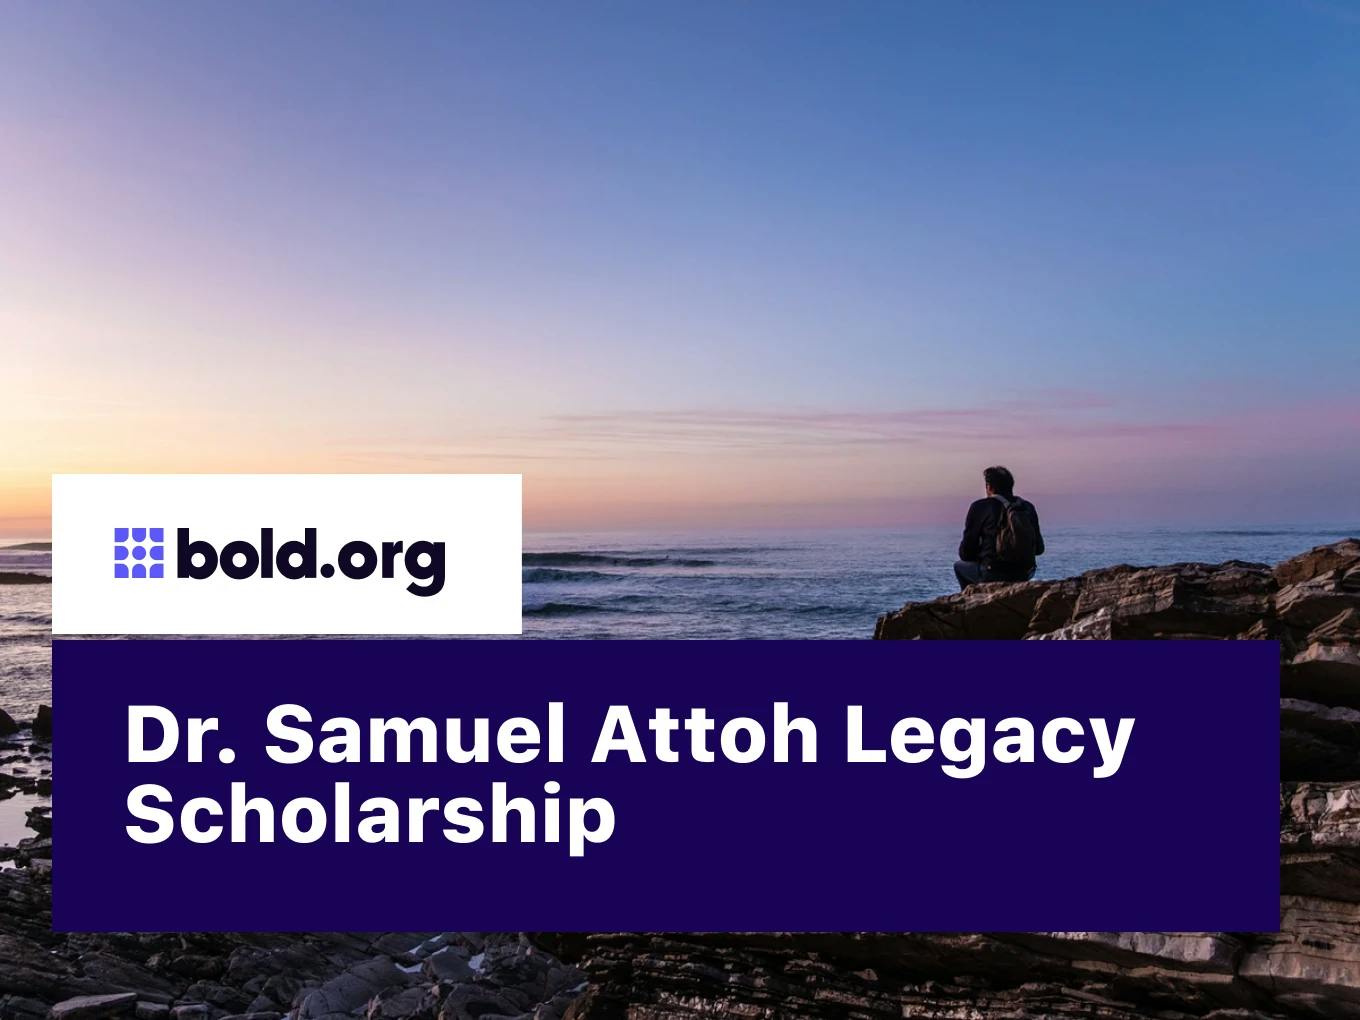 Dr. Samuel Attoh Legacy Scholarship